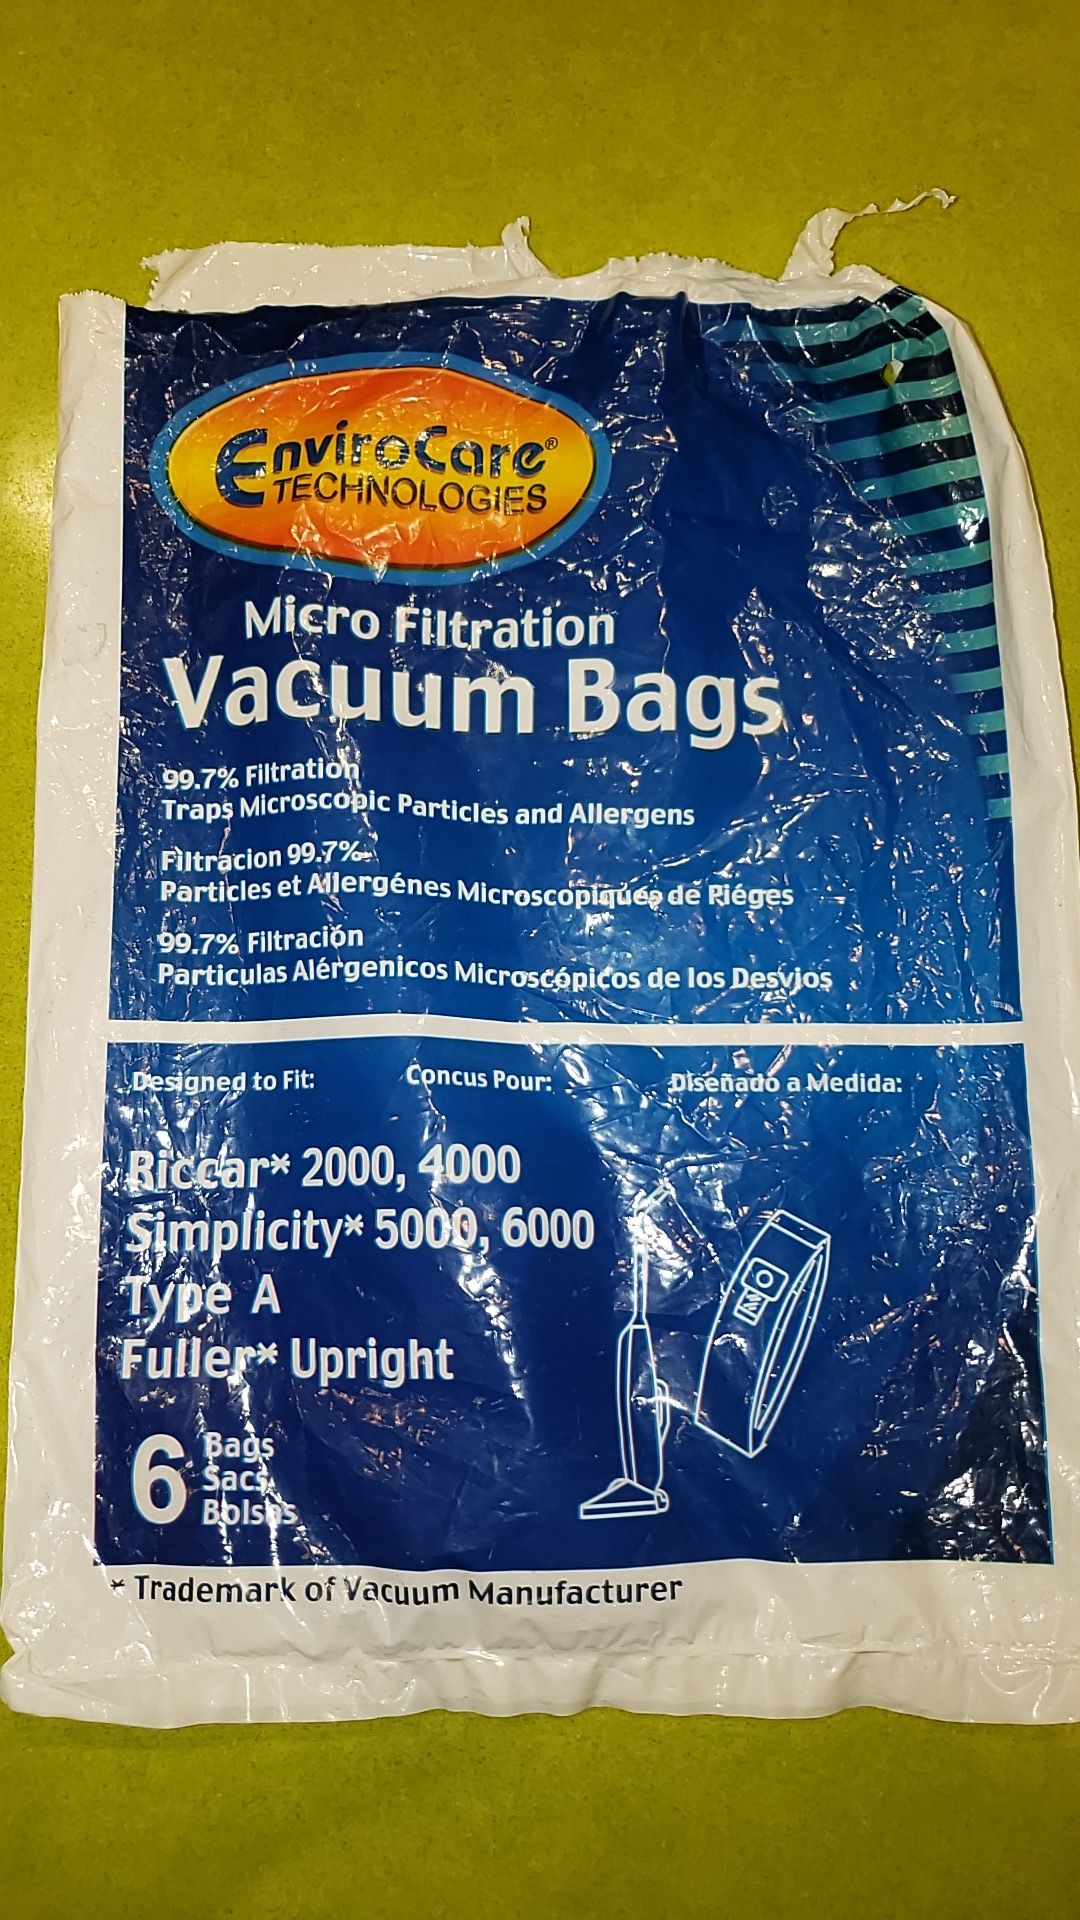 Vacuum bags for Riccar 2000, 4000. Simplicity 5000, 6000. Ttpr A